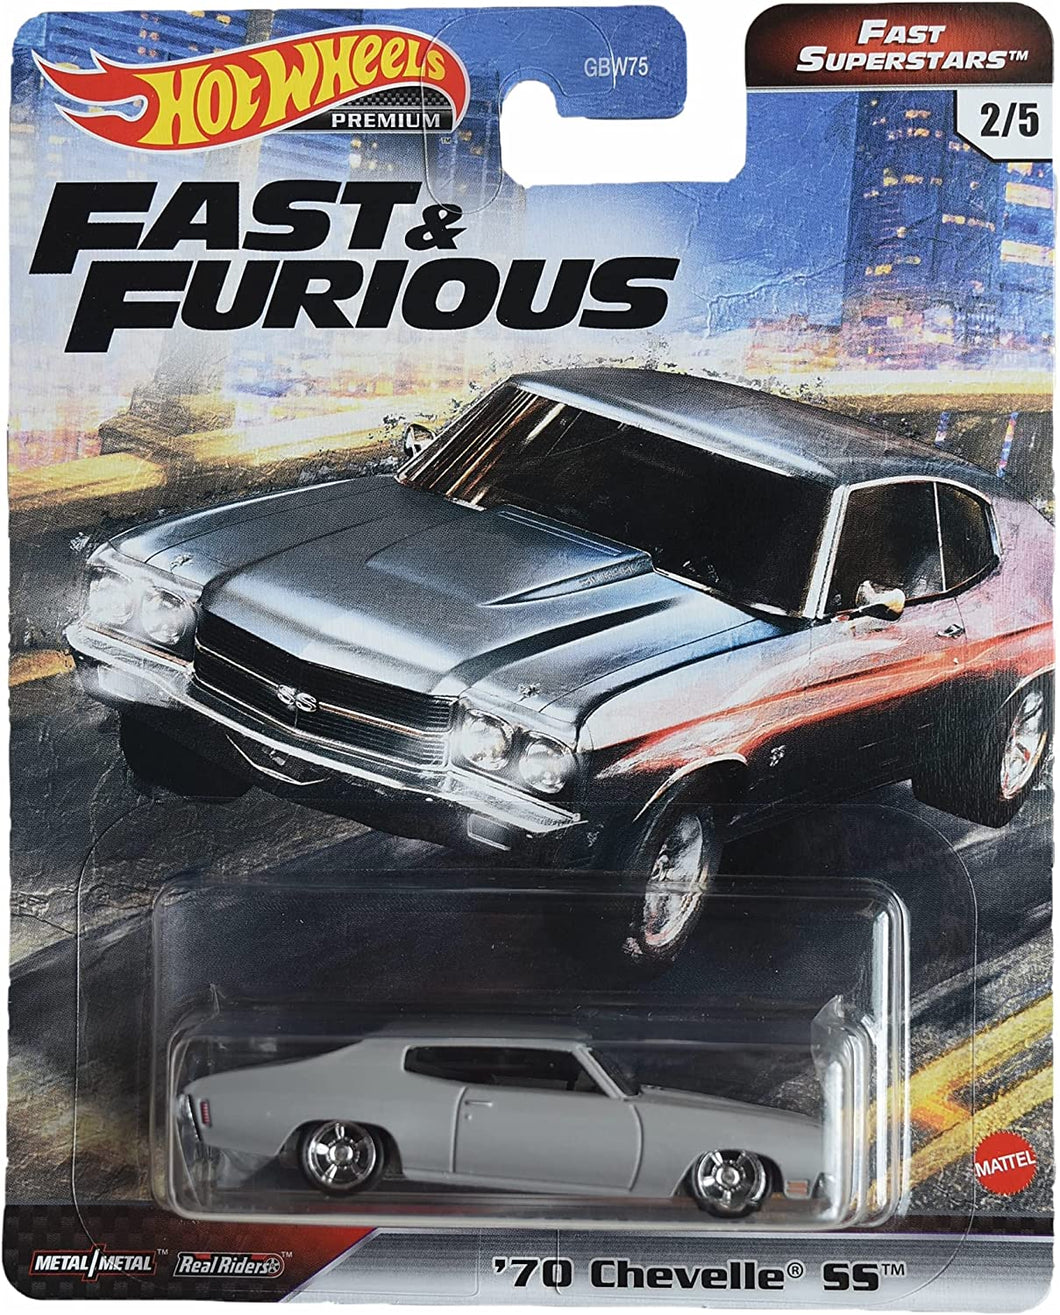 Hot Wheels Premium Fast & Furious '70 Chevelle SS Fast Superstars 2/5